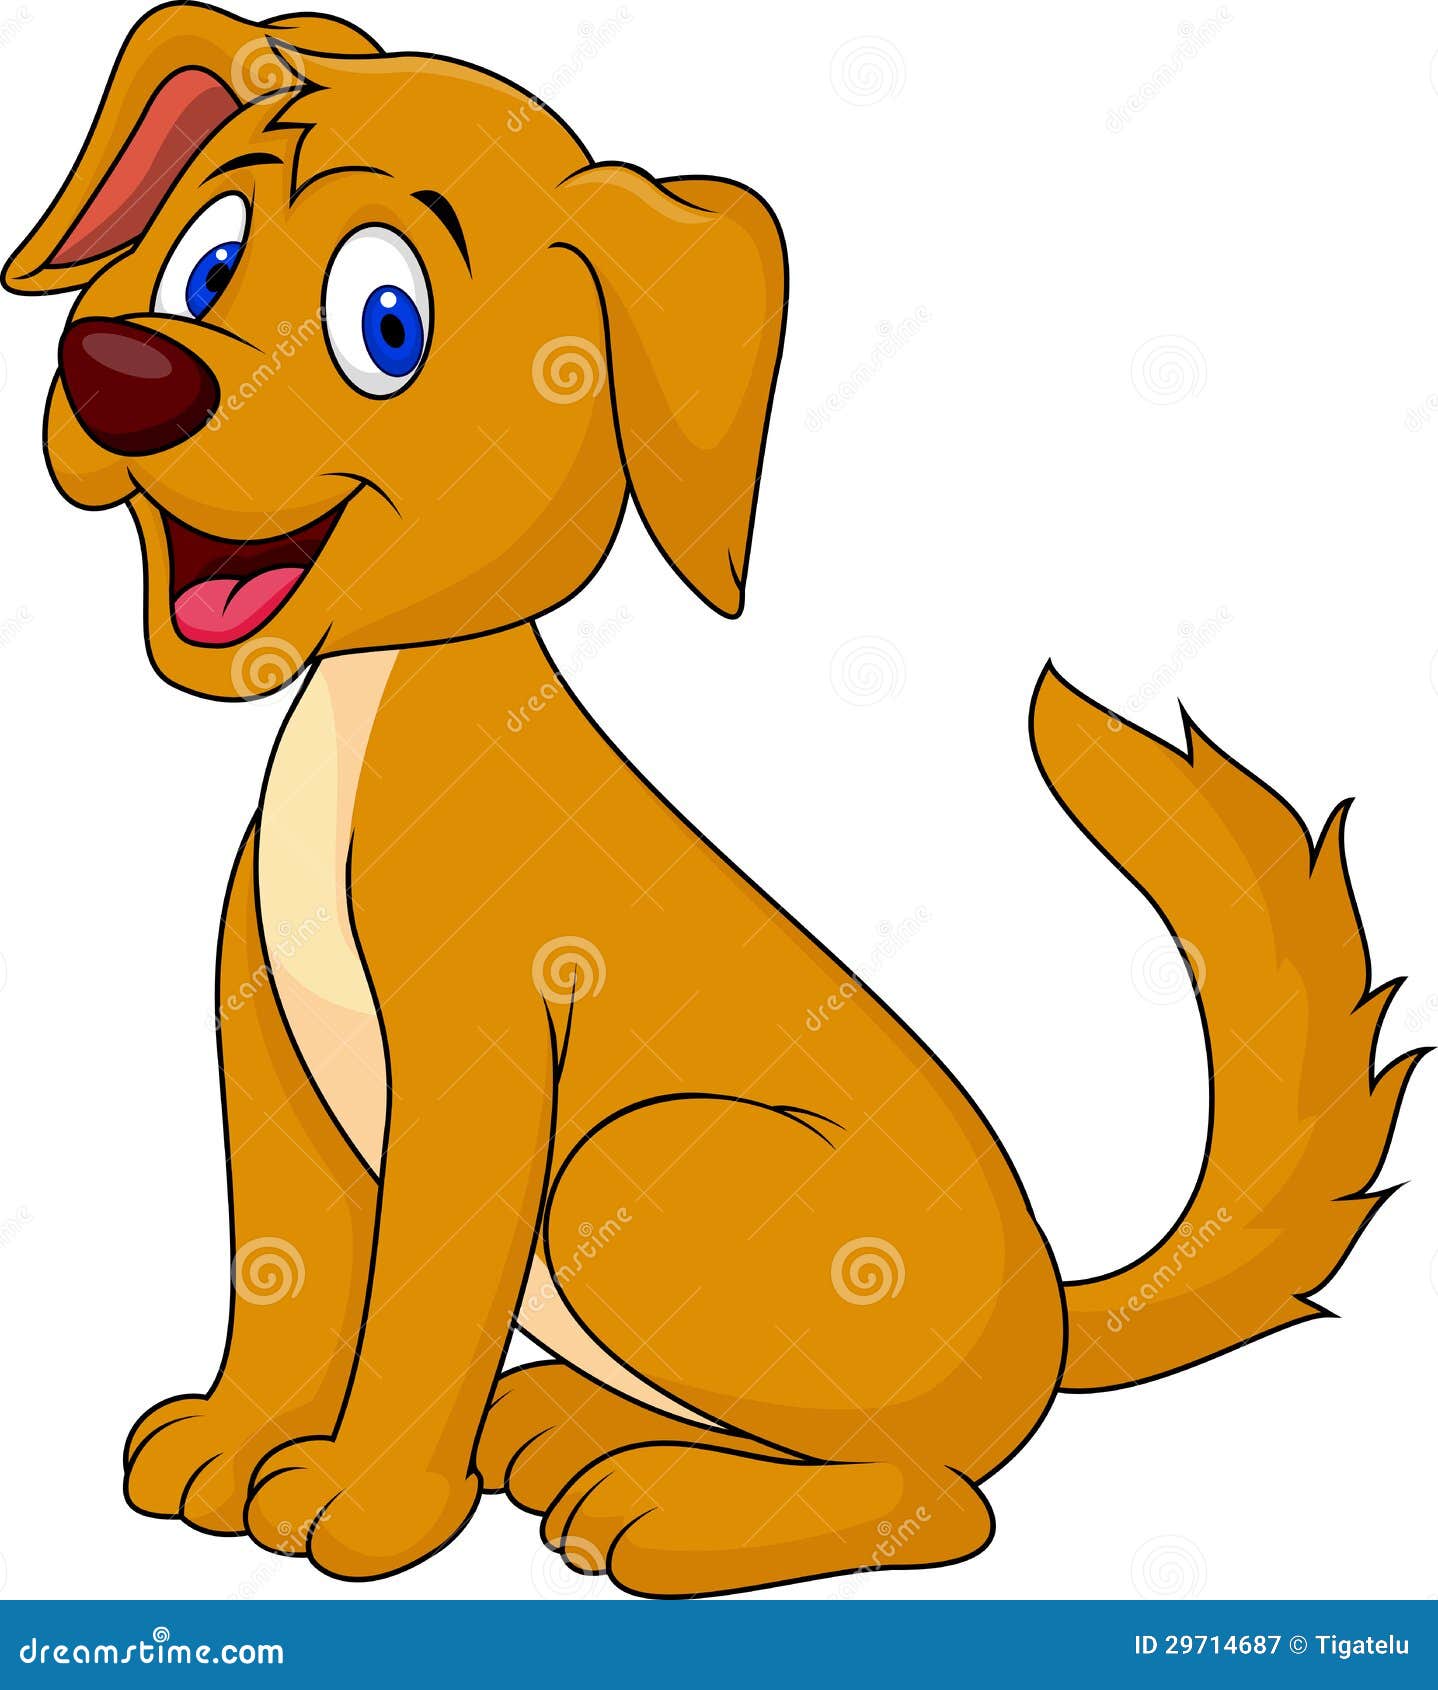 Cute dog cartoon sitting stock vector. Illustration of puppy - 29714687